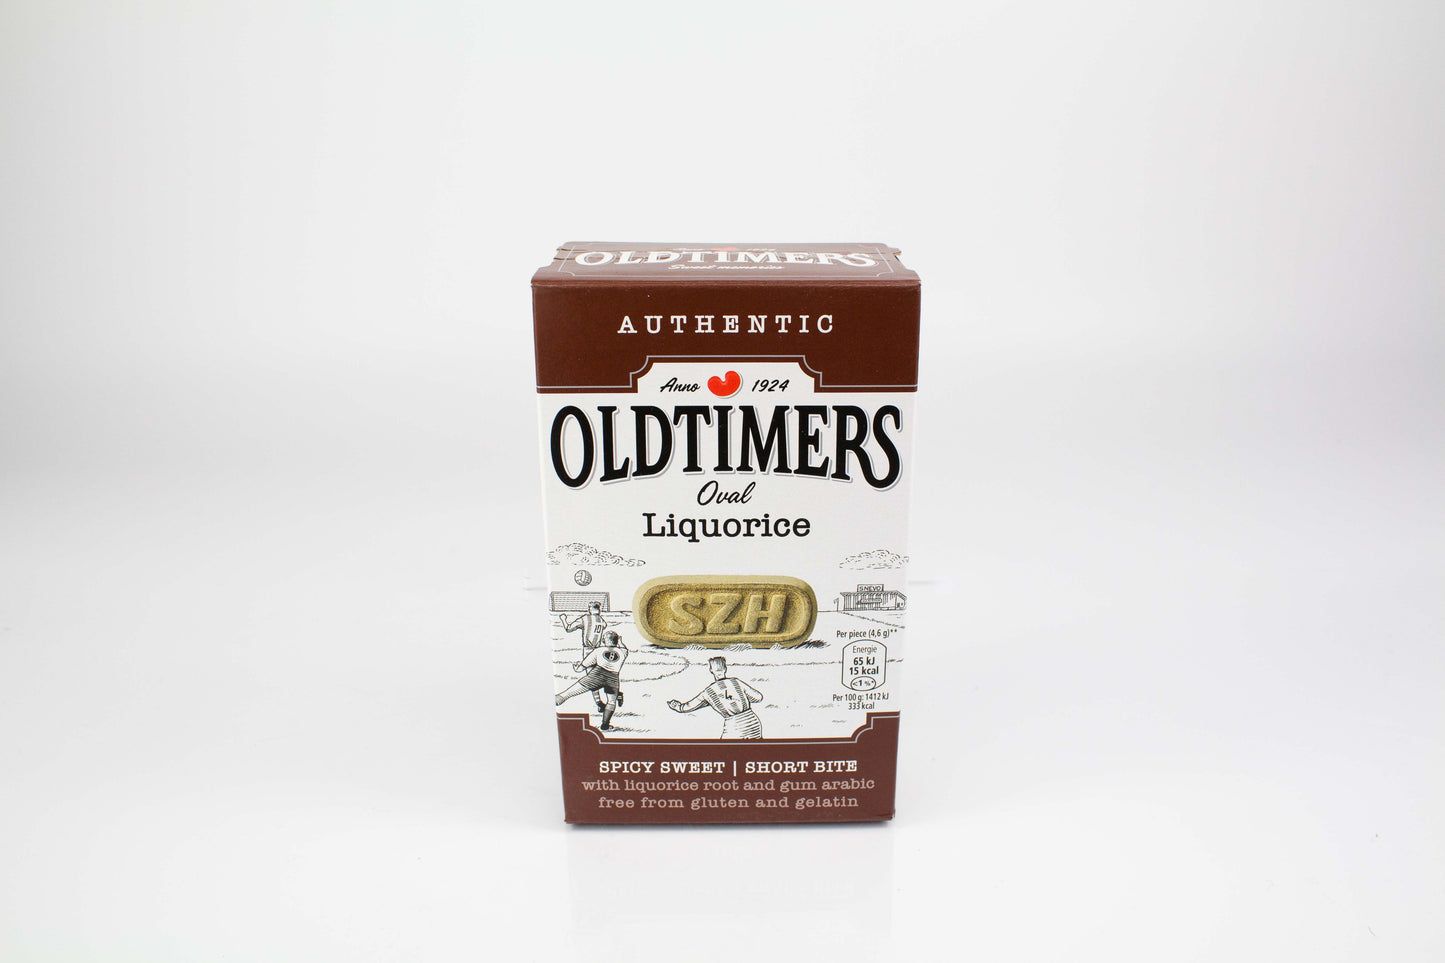 Oldtimers Oval Liquorice Box